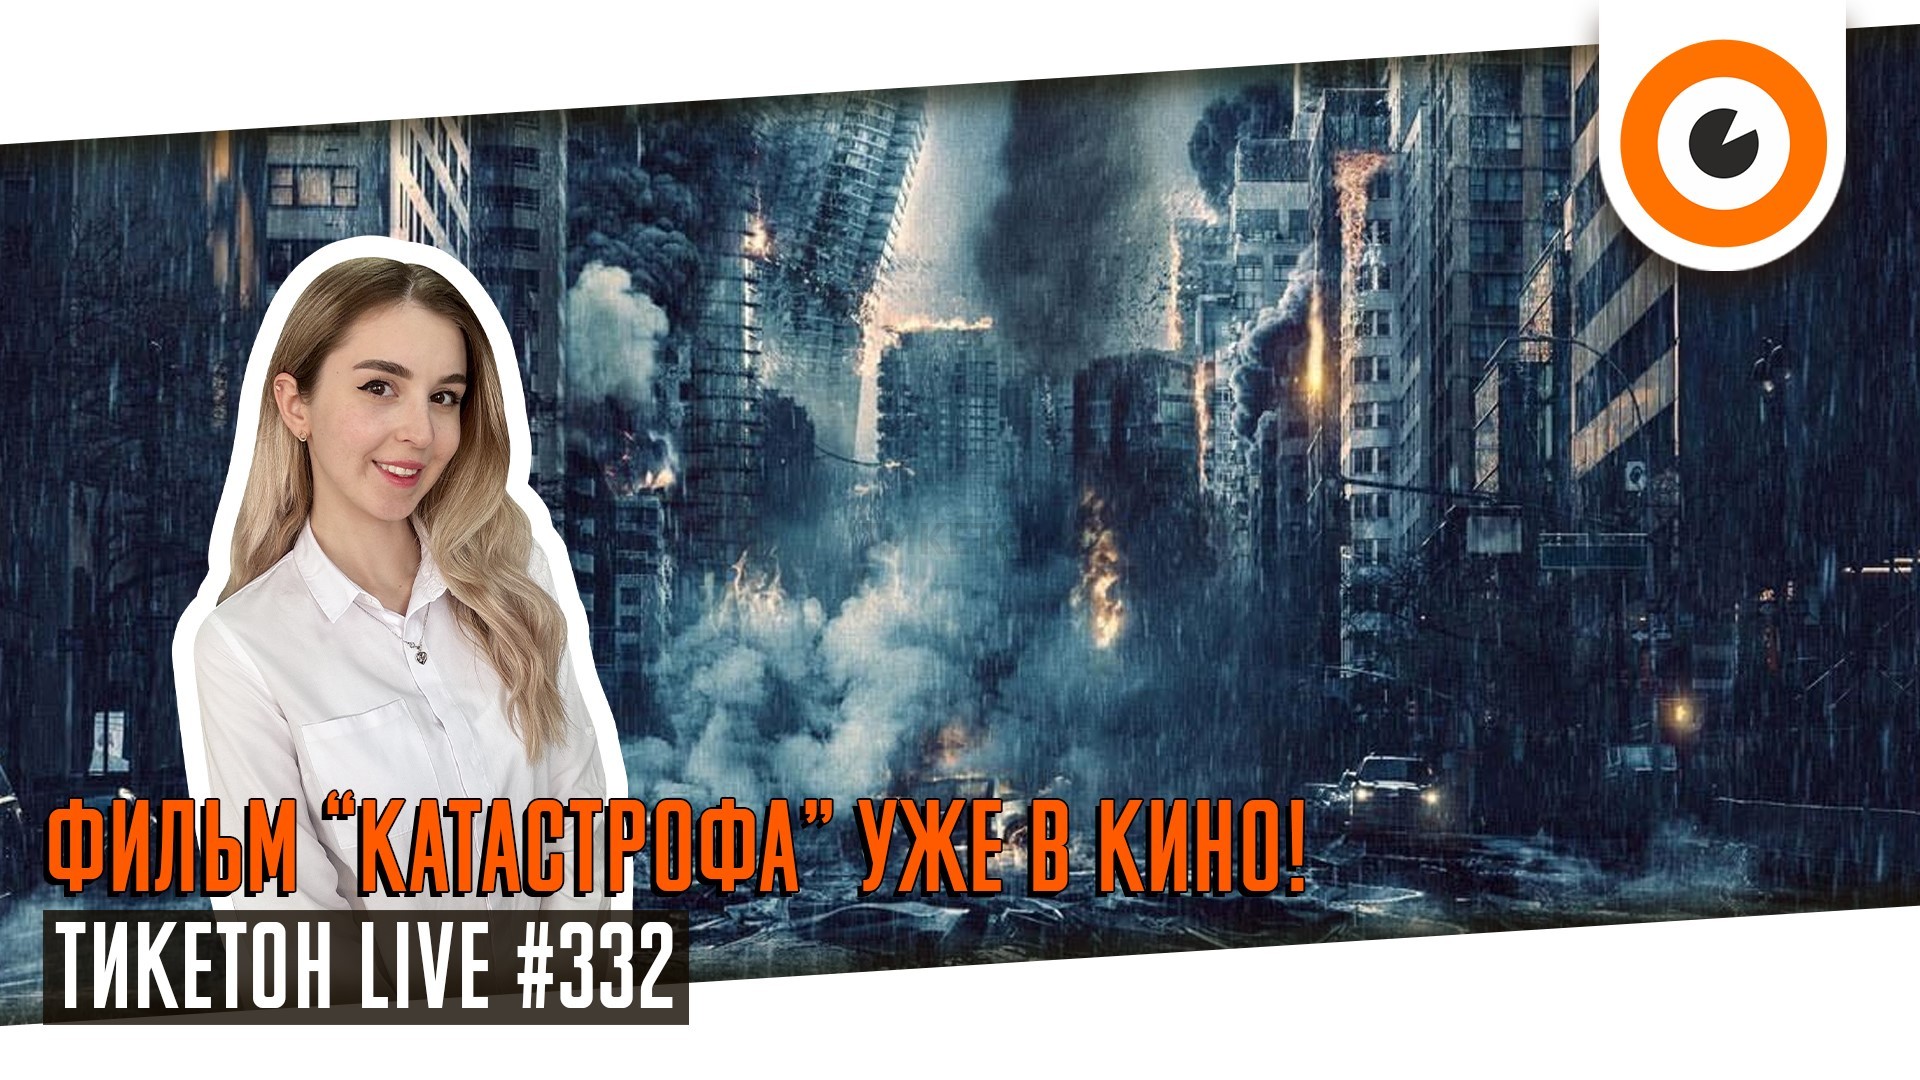 Ticketon Live#332! ru